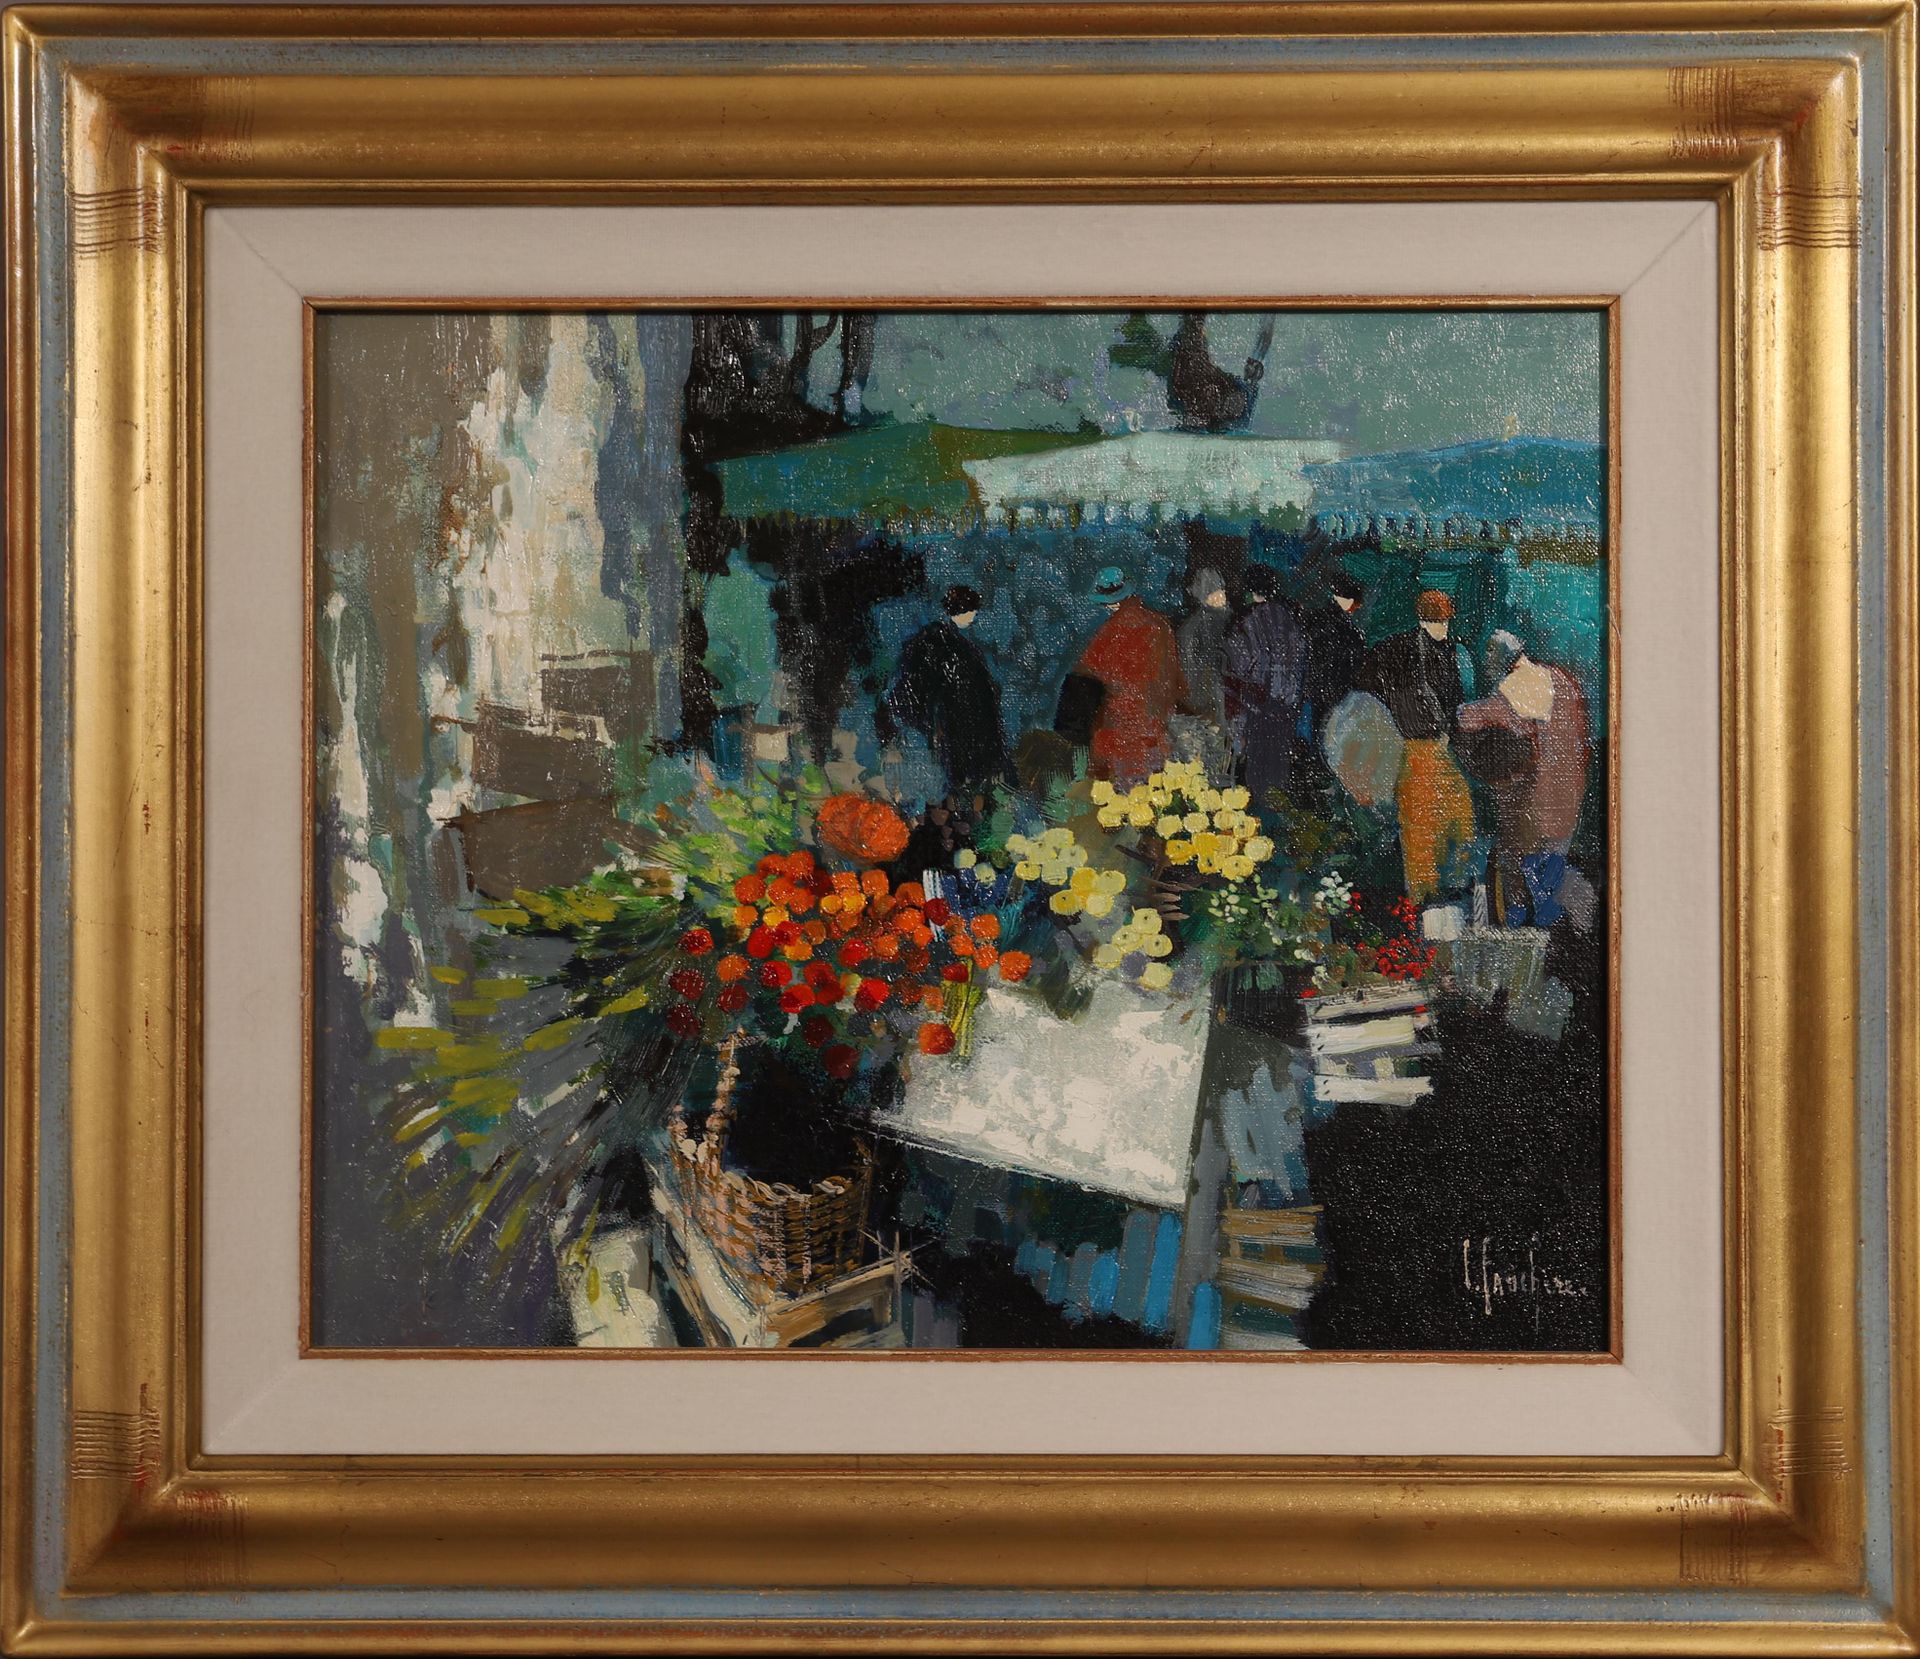 Null 克劳德-福舍尔（1936-2019年）

法国画家

布面油画，市场的景色

右下方有签名。

二十世纪时期

外观尺寸：高：33；宽：41厘米